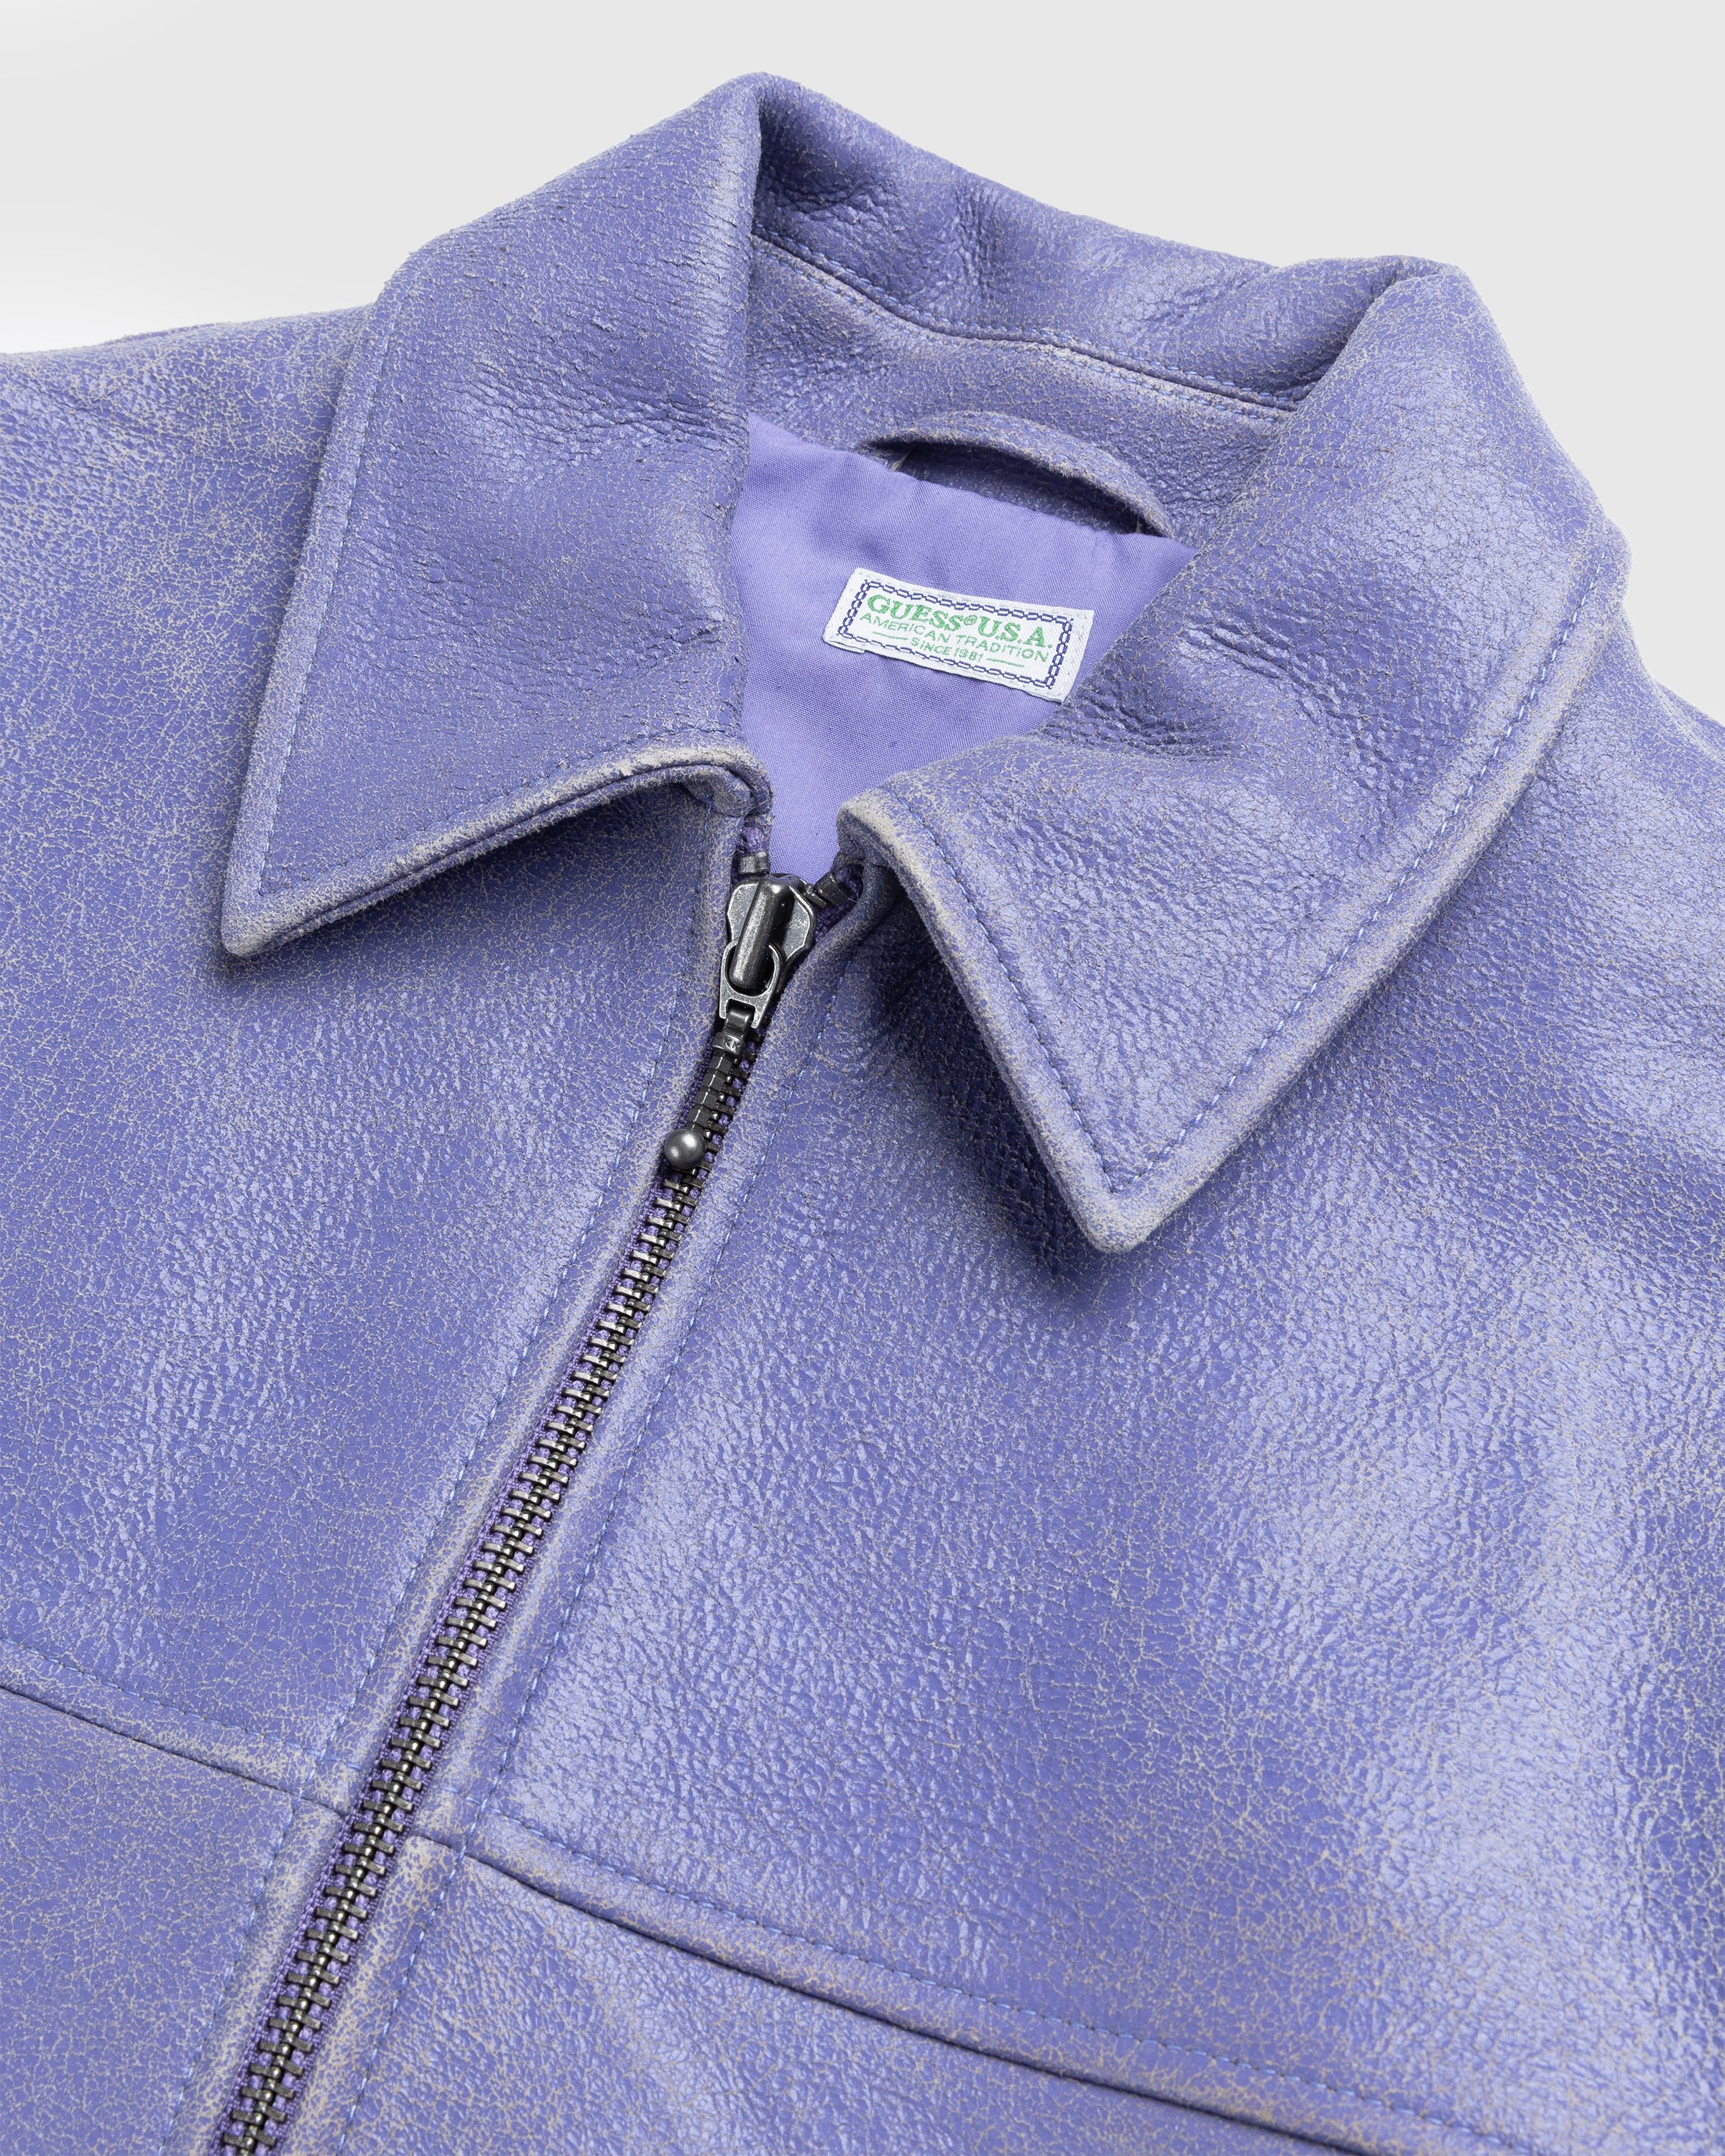 Guess USA - Crackle Leather Jacket Purple - Clothing - Purple - Image 6